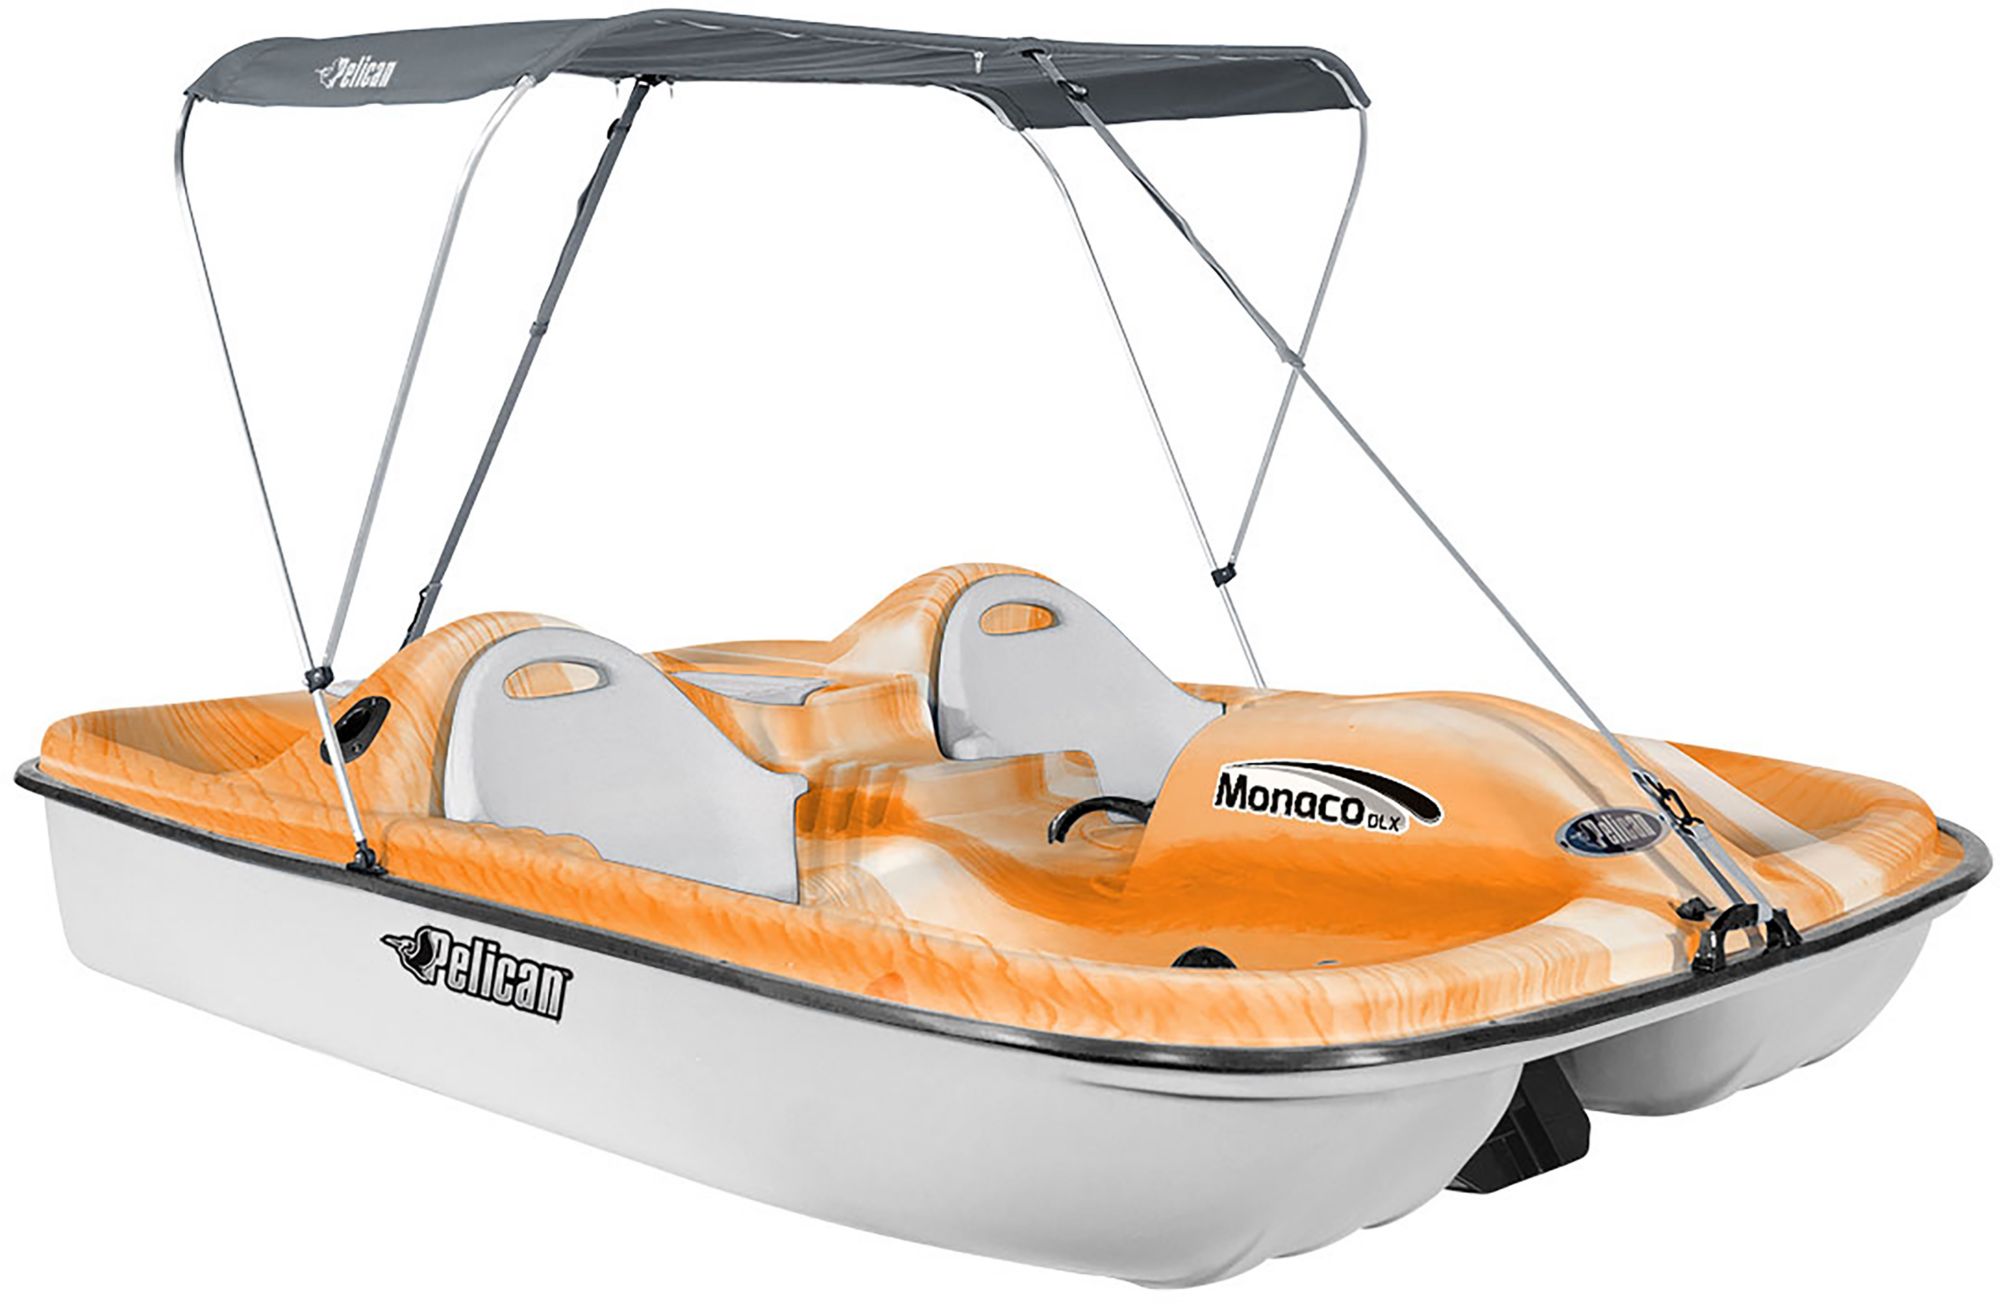 Dick's Sporting Goods Pelican Monaco DLX Angler Pedal Boat